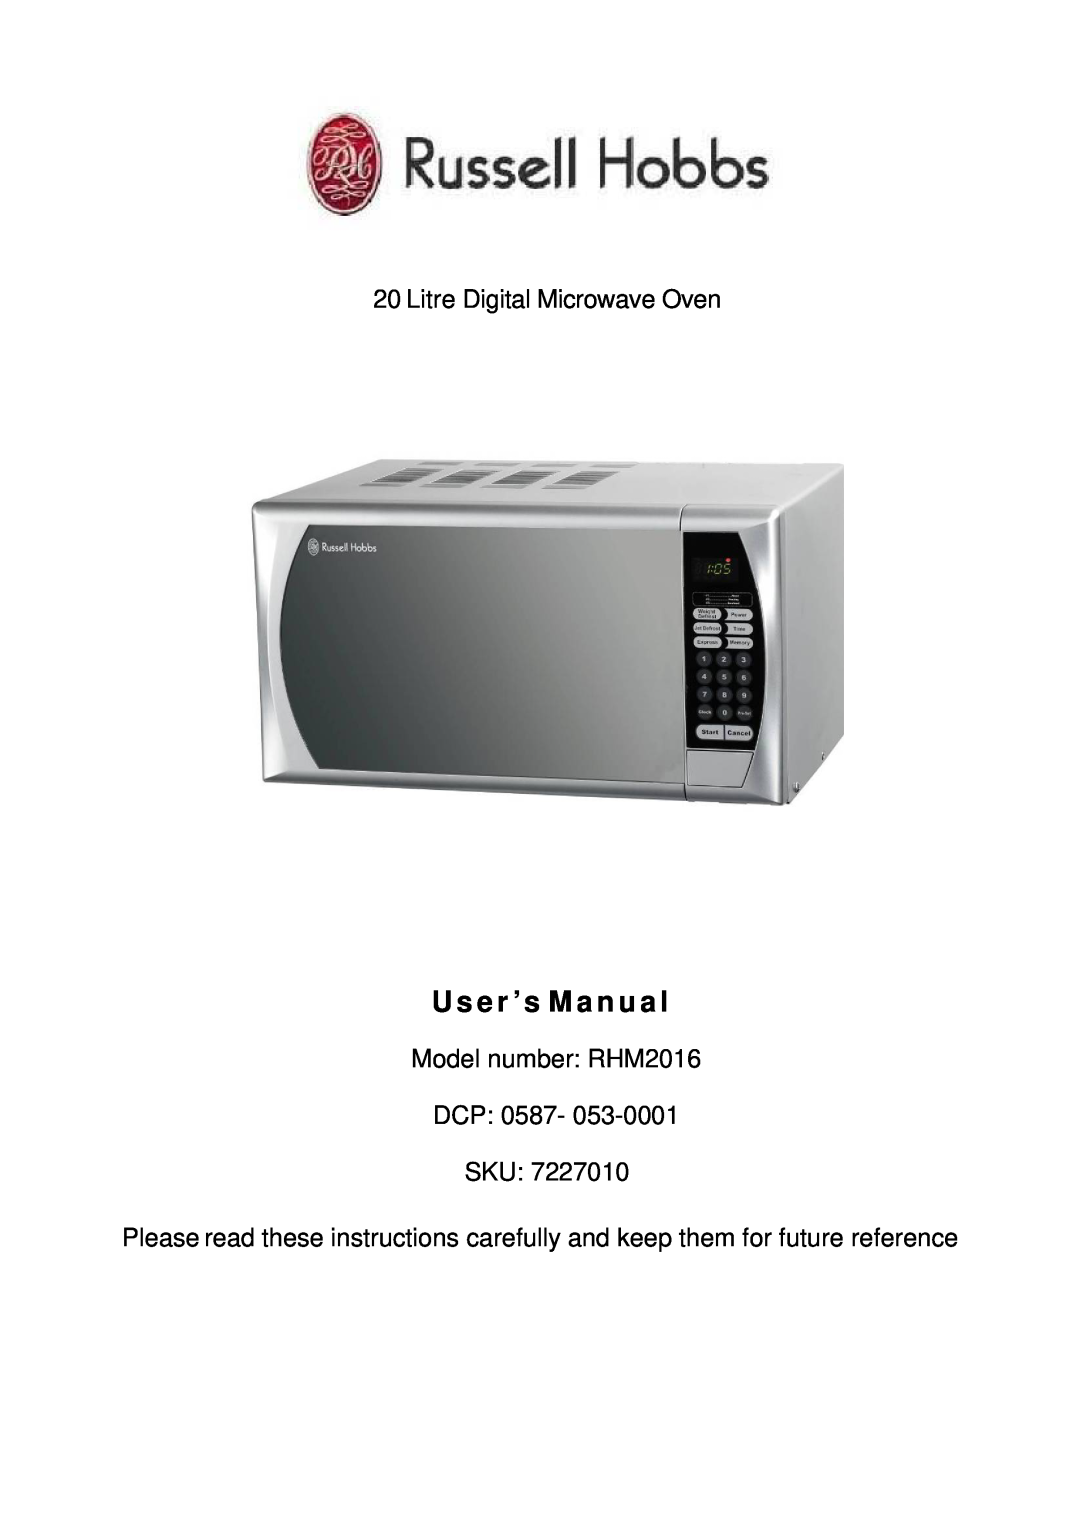 Russell Hobbs user manual Use r ’s Manual, Litre Digital Microwave Oven, Model number RHM2016 DCP 0587- SKU 